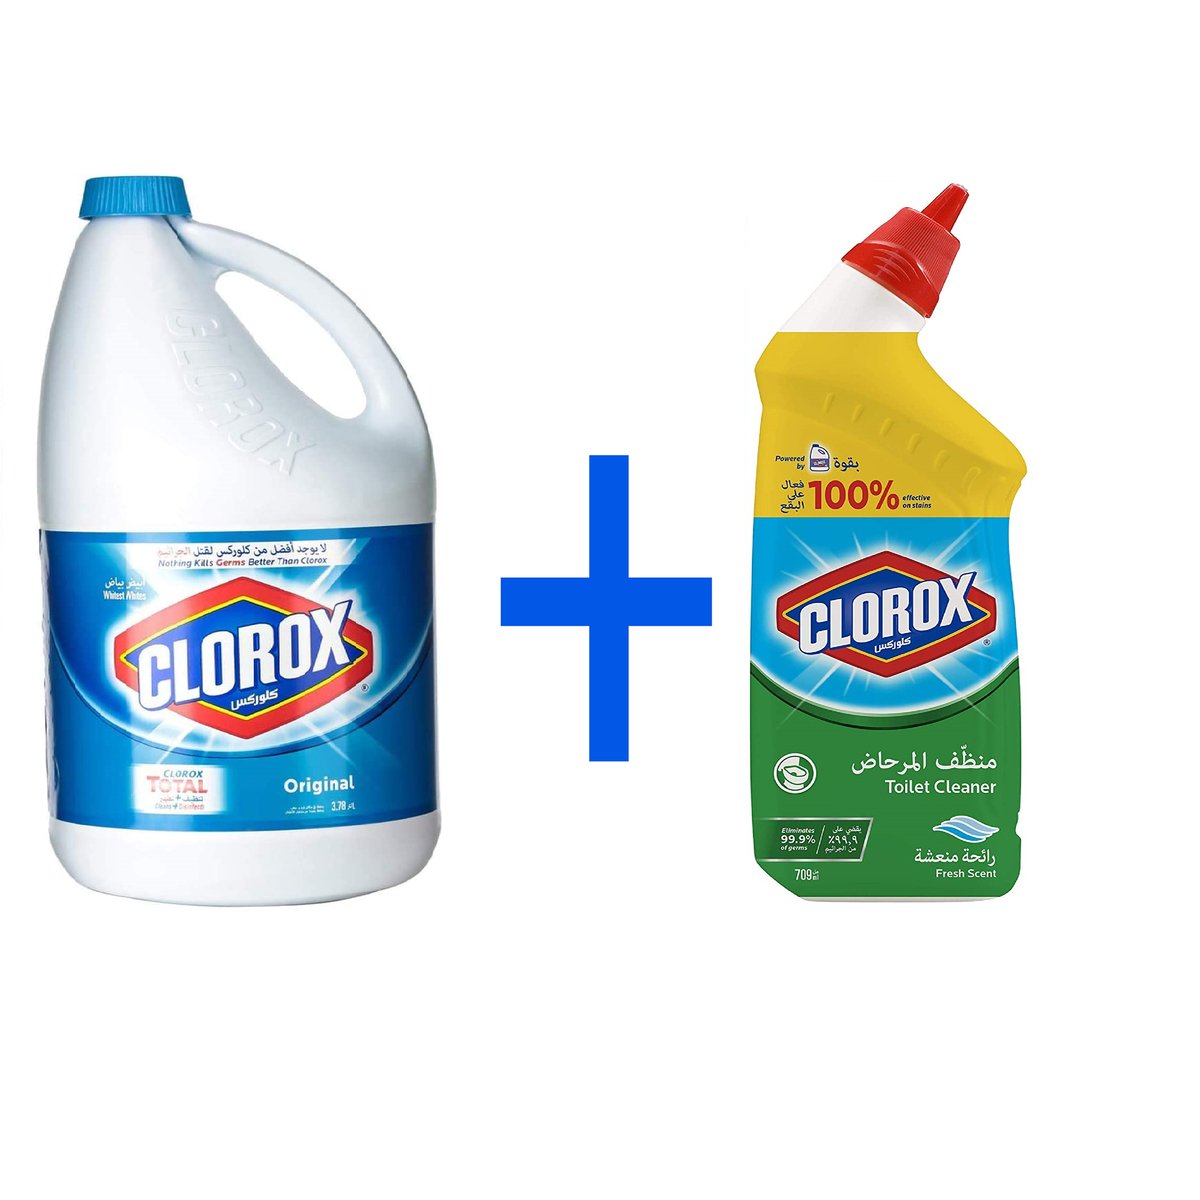 Clorox Liquid Bleach Original 3.78Litre Plus Clorox Toilet Bowl Cleaner Fresh Scent 709ml